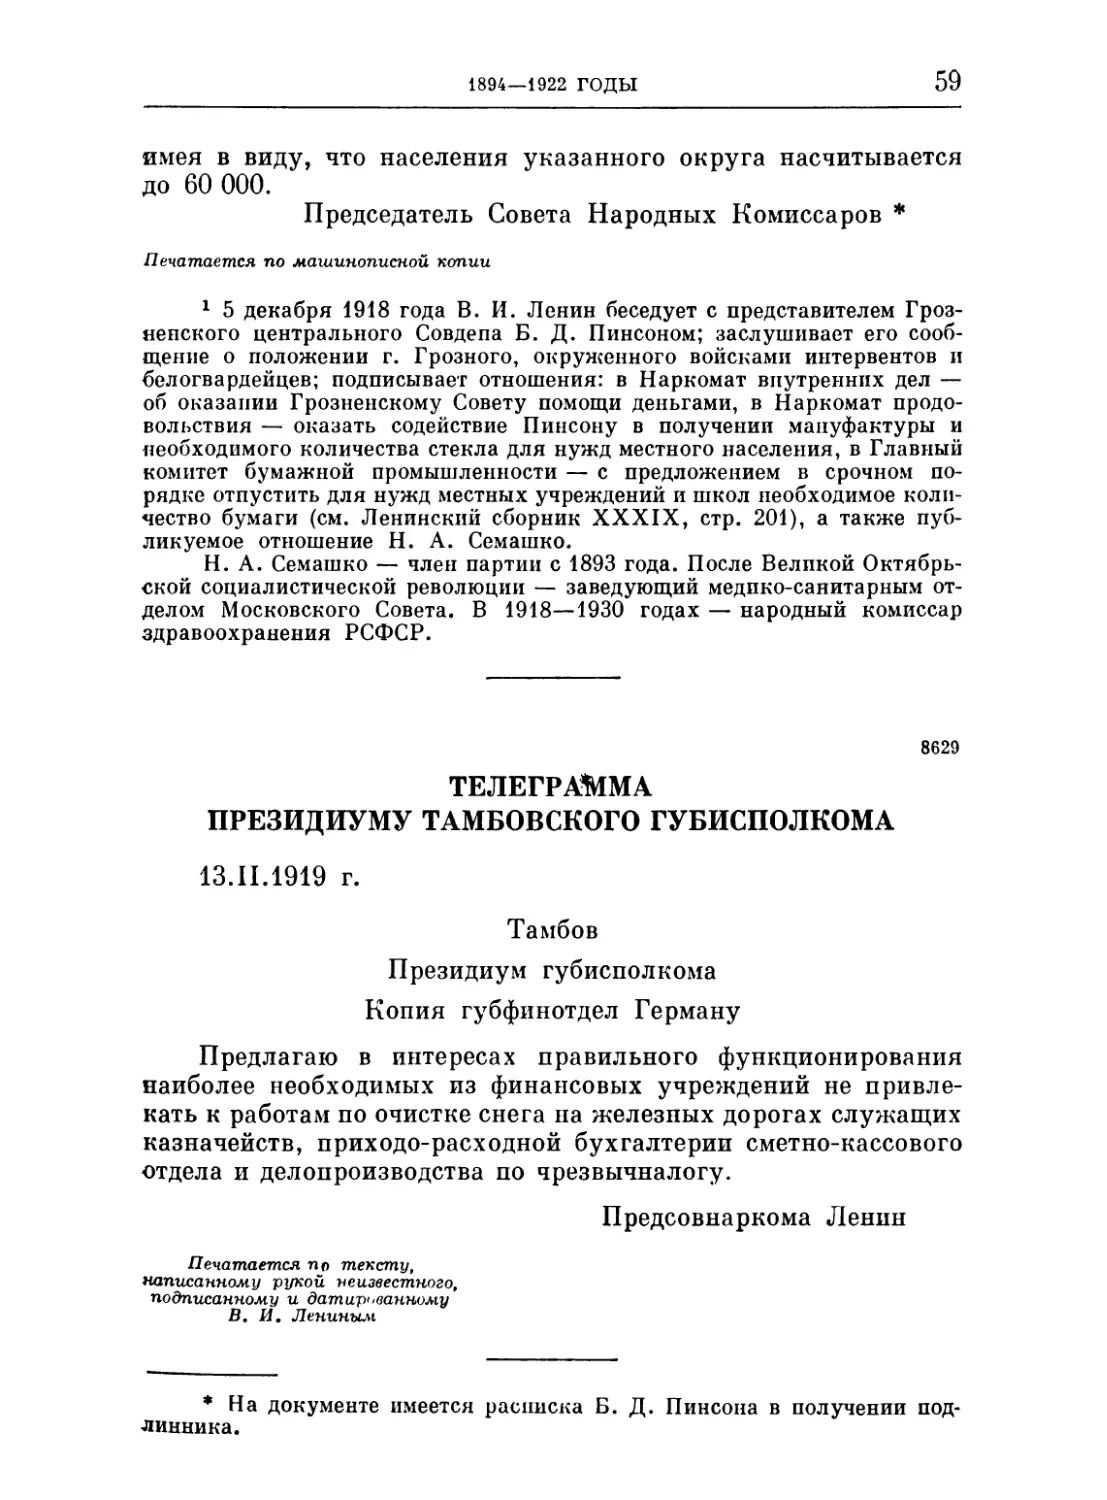 Телеграмма президиуму Тамбовского губисполкома. 13 февраля 1919